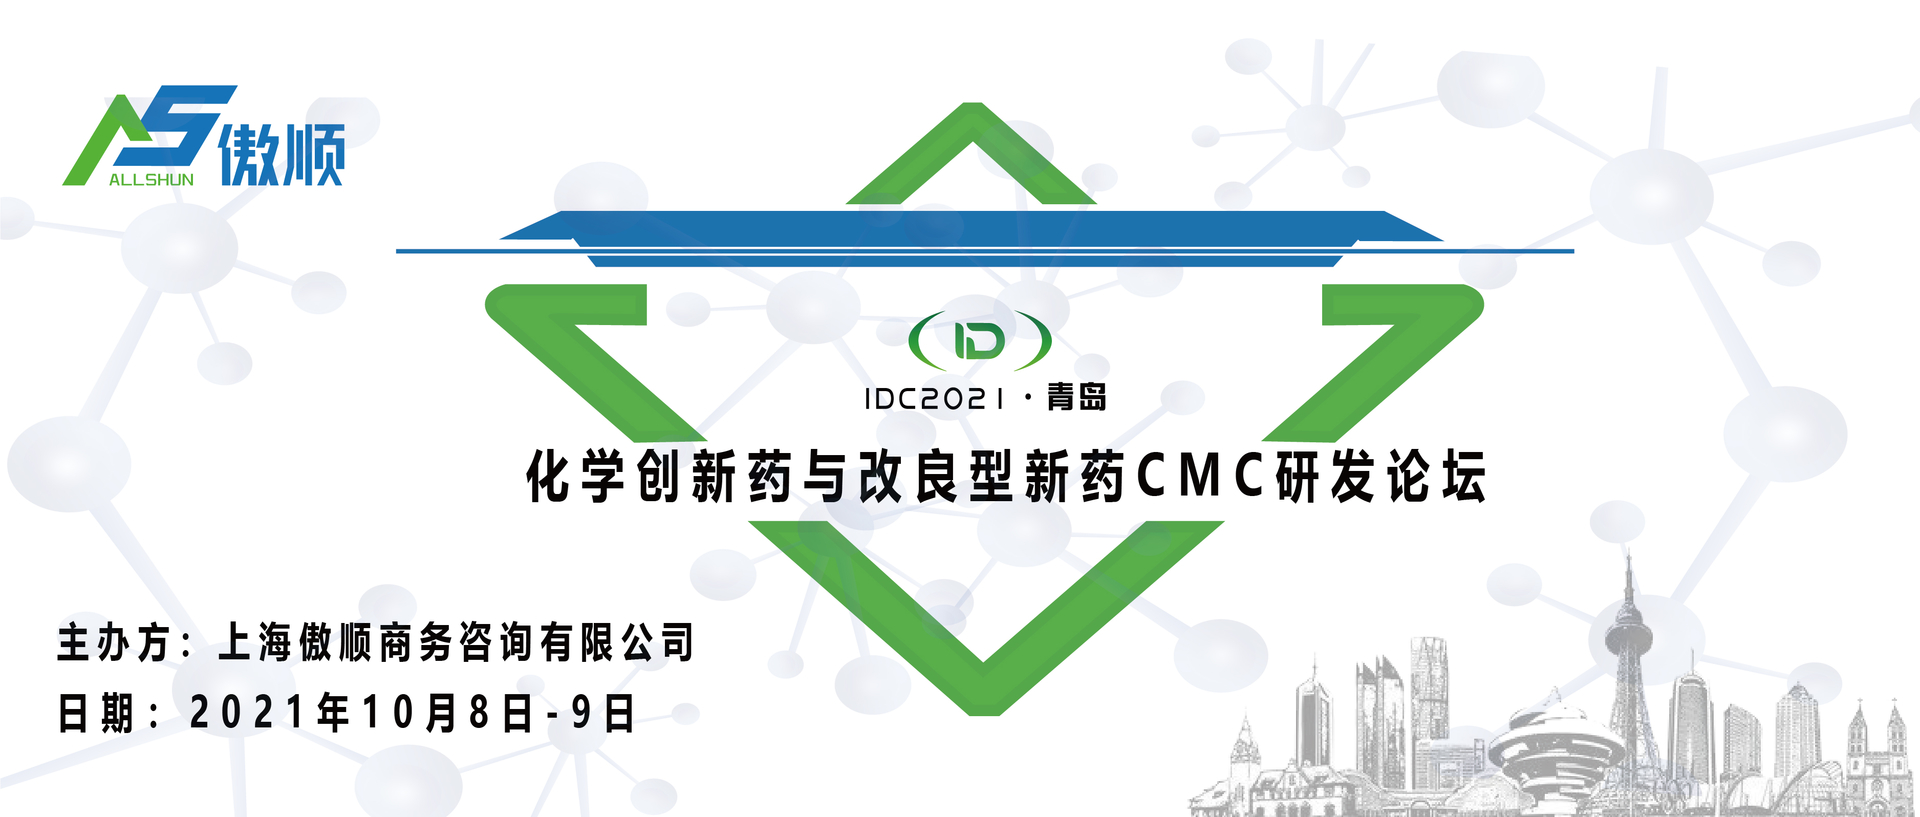 IDC 2021·青岛 化学创新药和改良型新药研发论坛